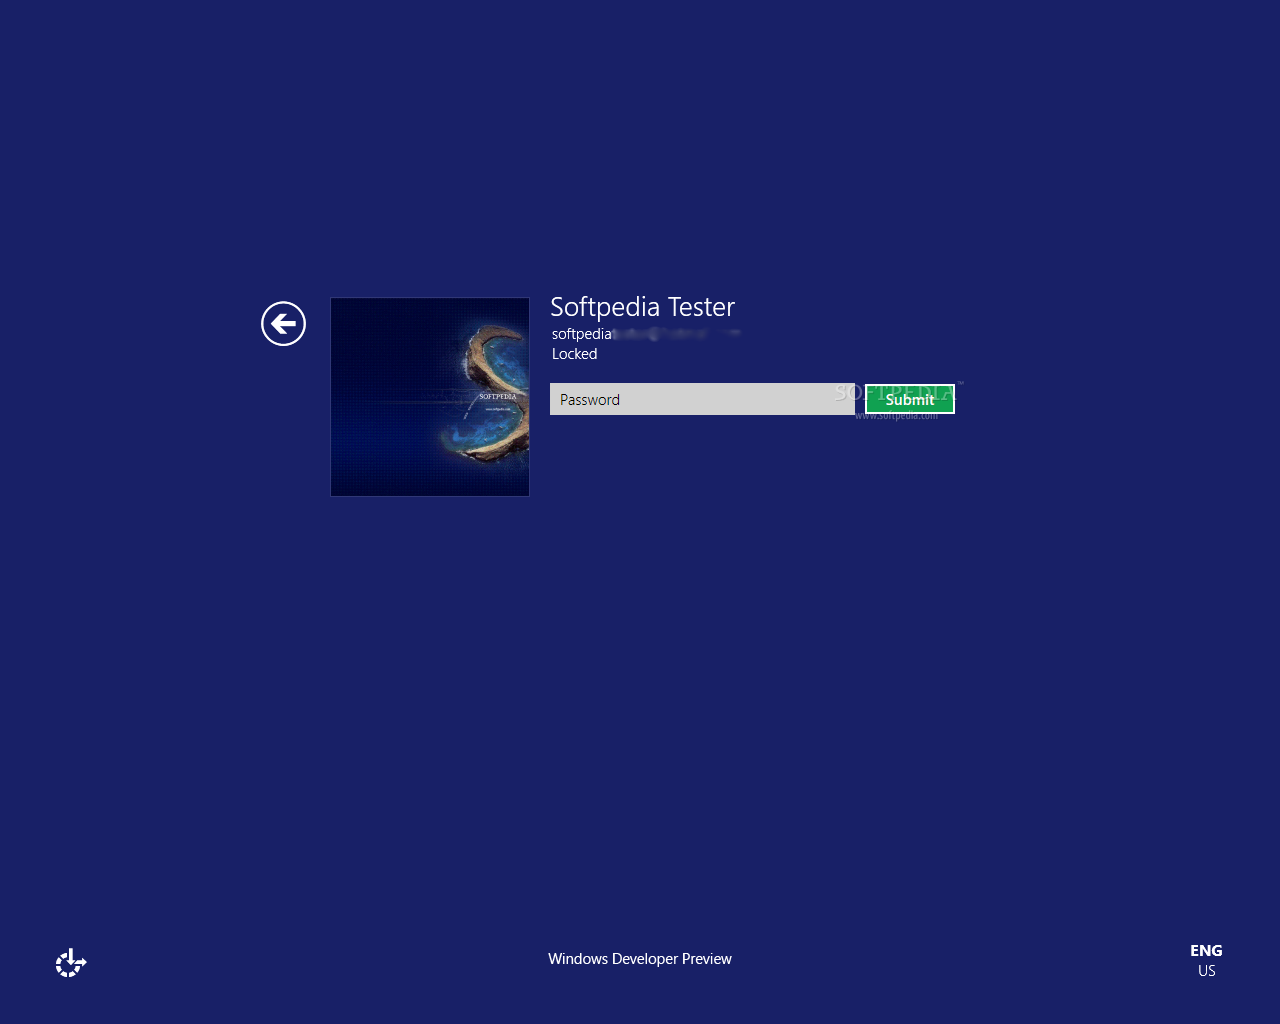 Windows 8 Logon Screen